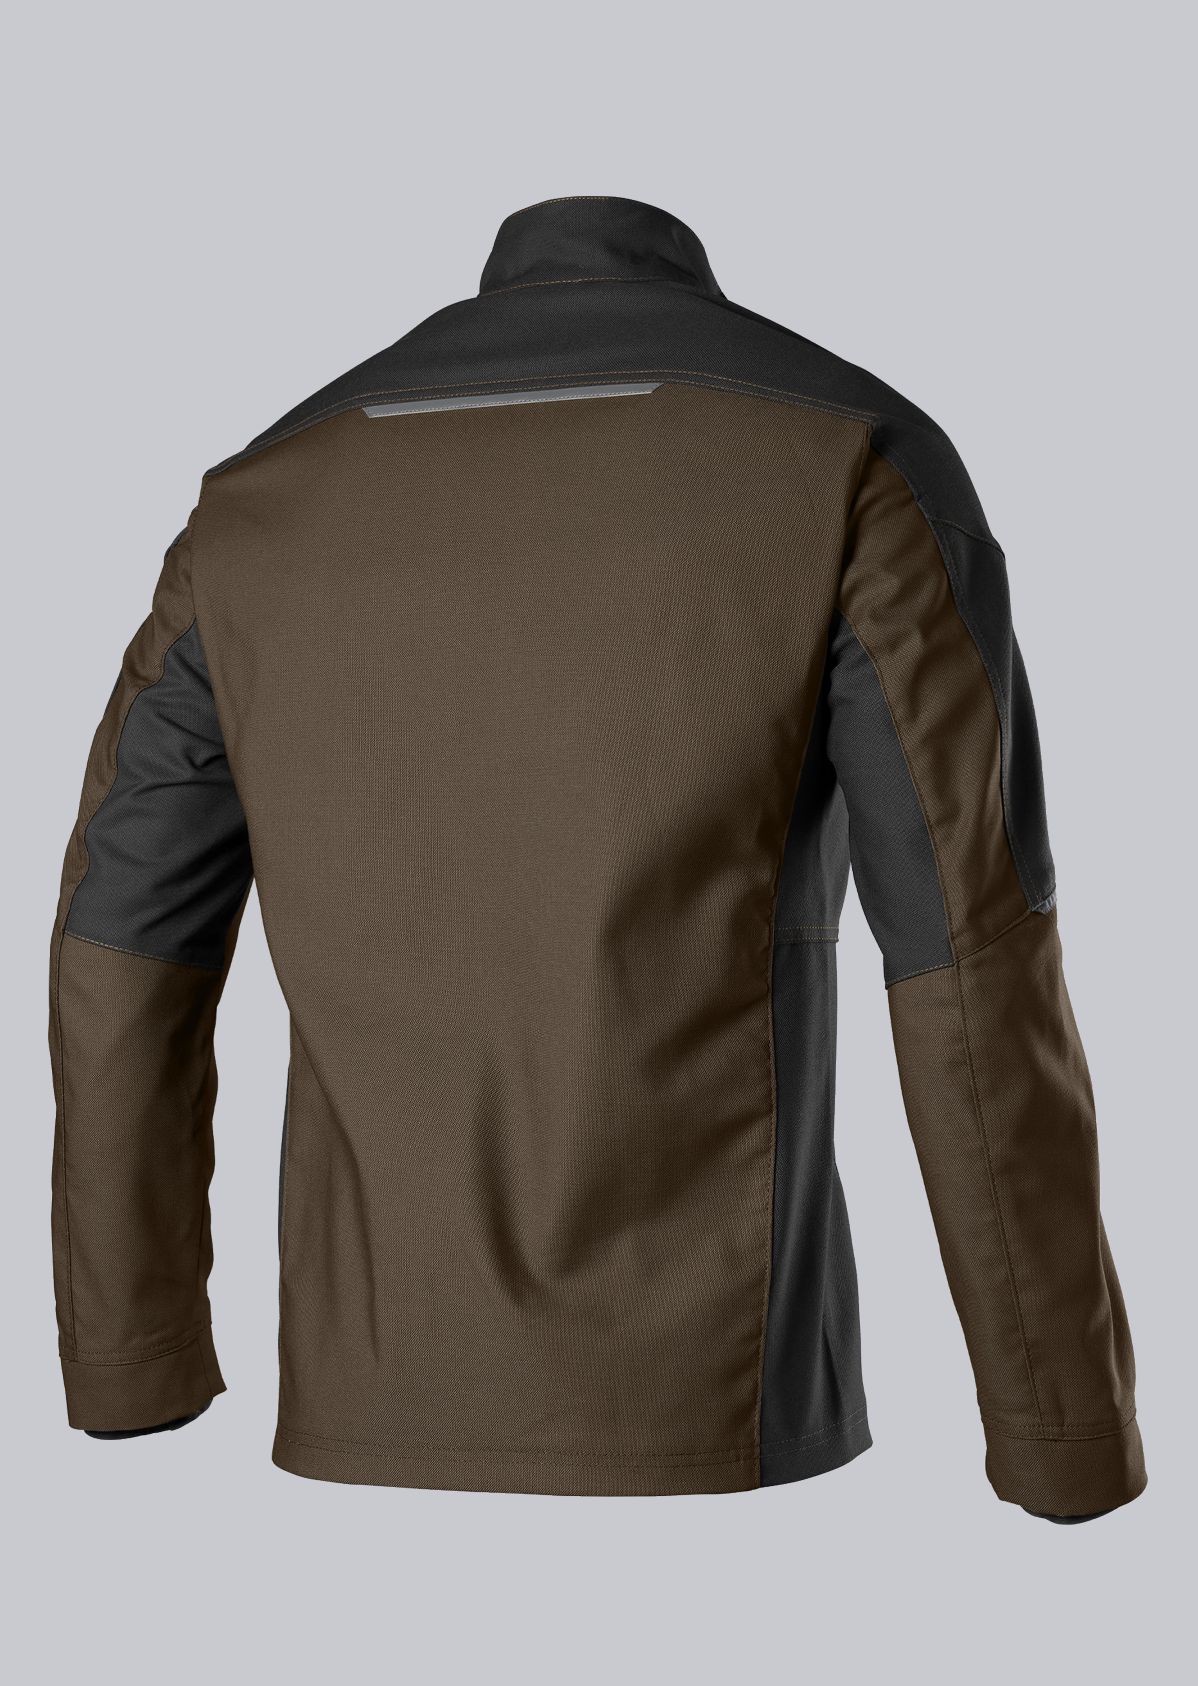 BP® Robust work jacket